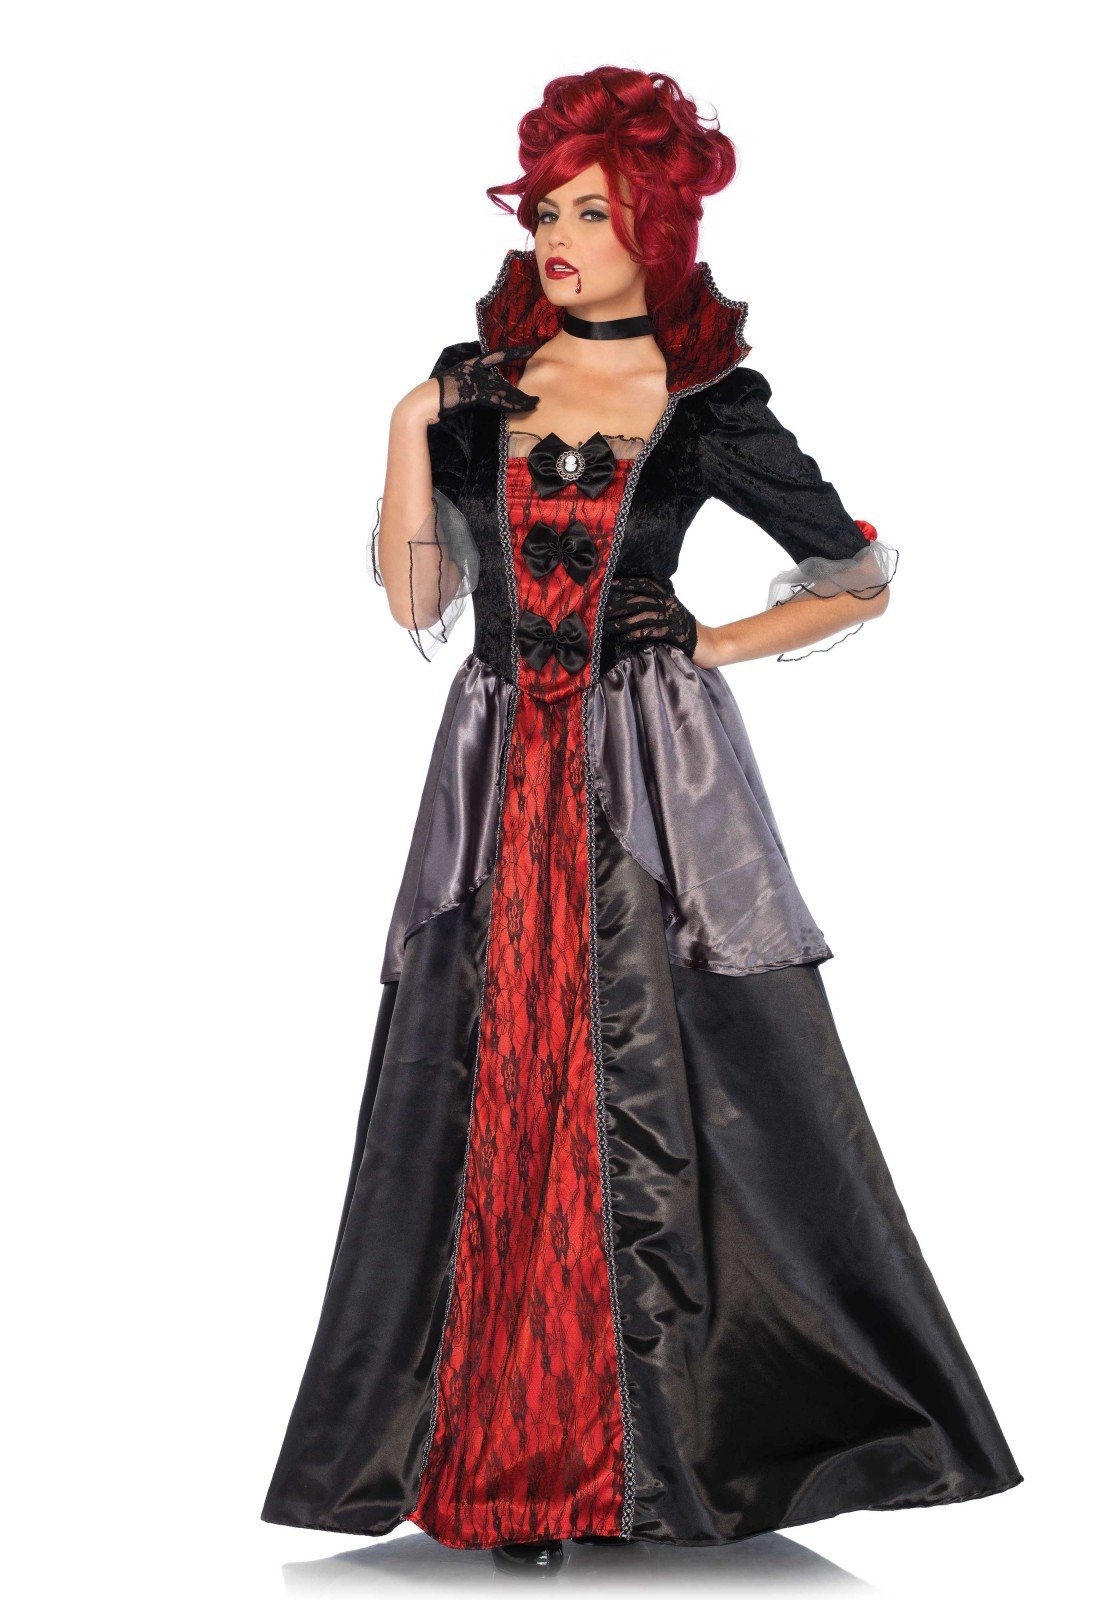 LEG AVENUE 85551 2 teilig-Set Blood Countess, Damen Karneval Kostüm Fasching, M, schwarz/rot